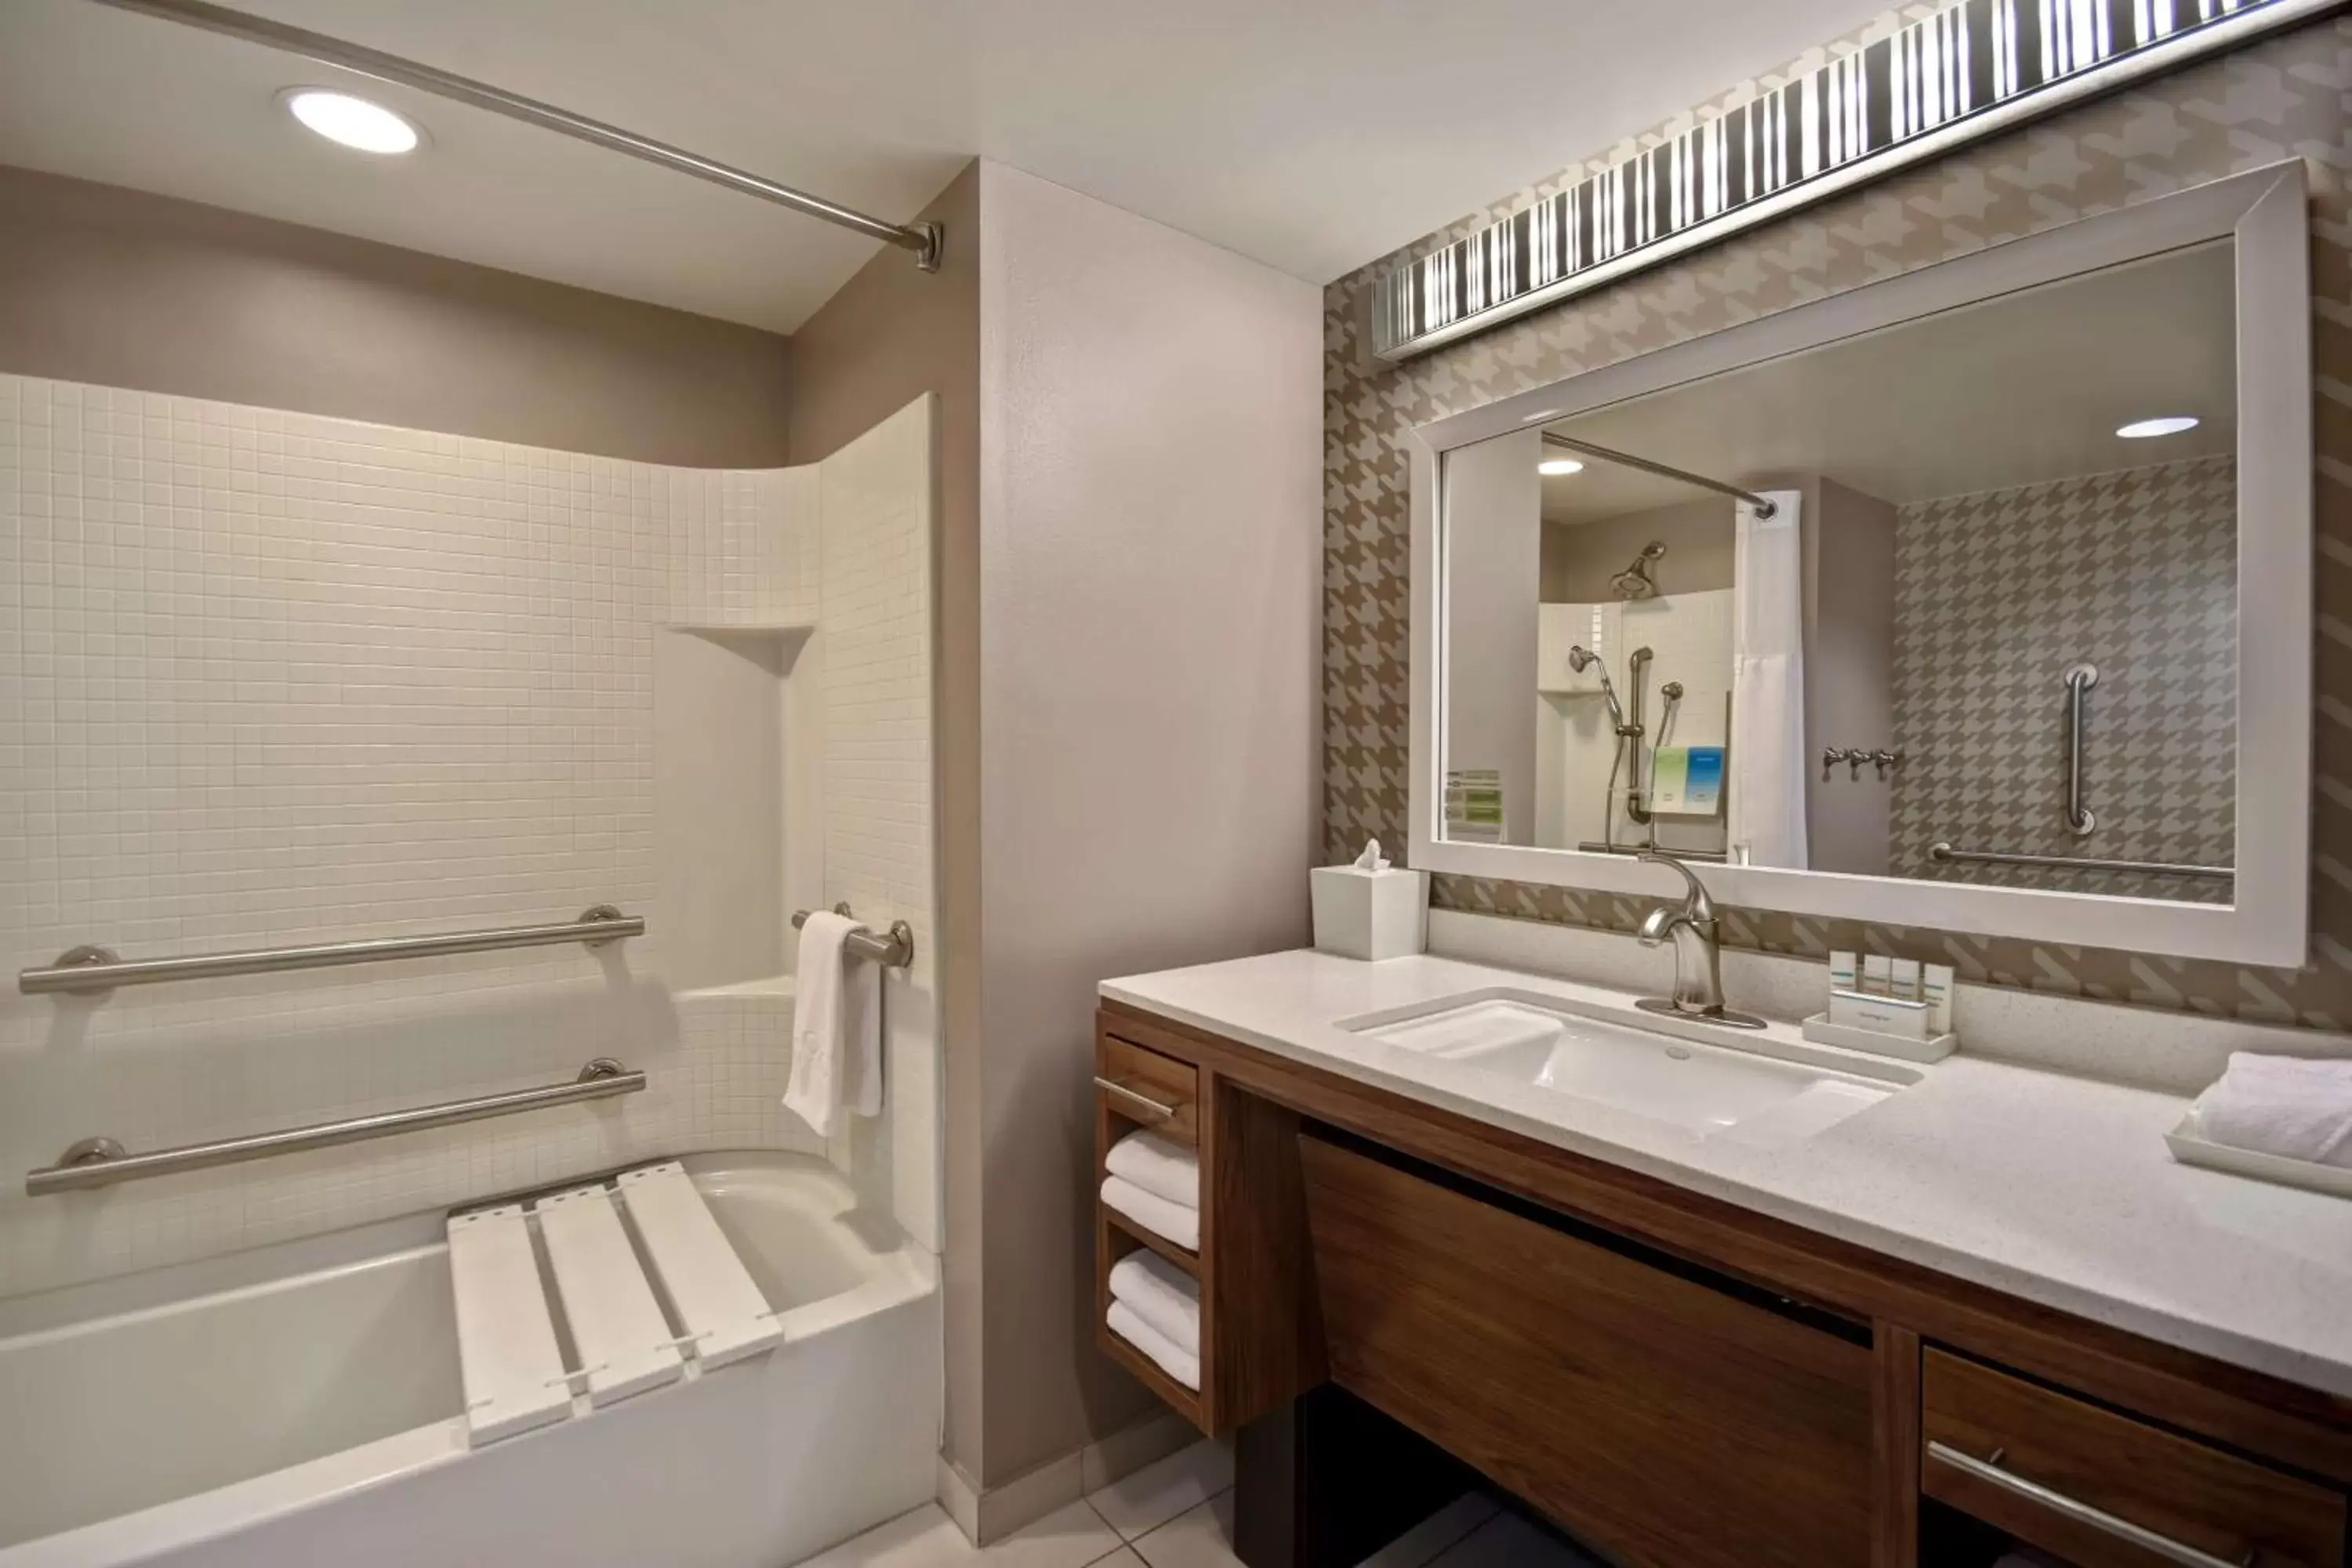 Bathroom in Home2 Suites by Hilton Nashville Vanderbilt, TN